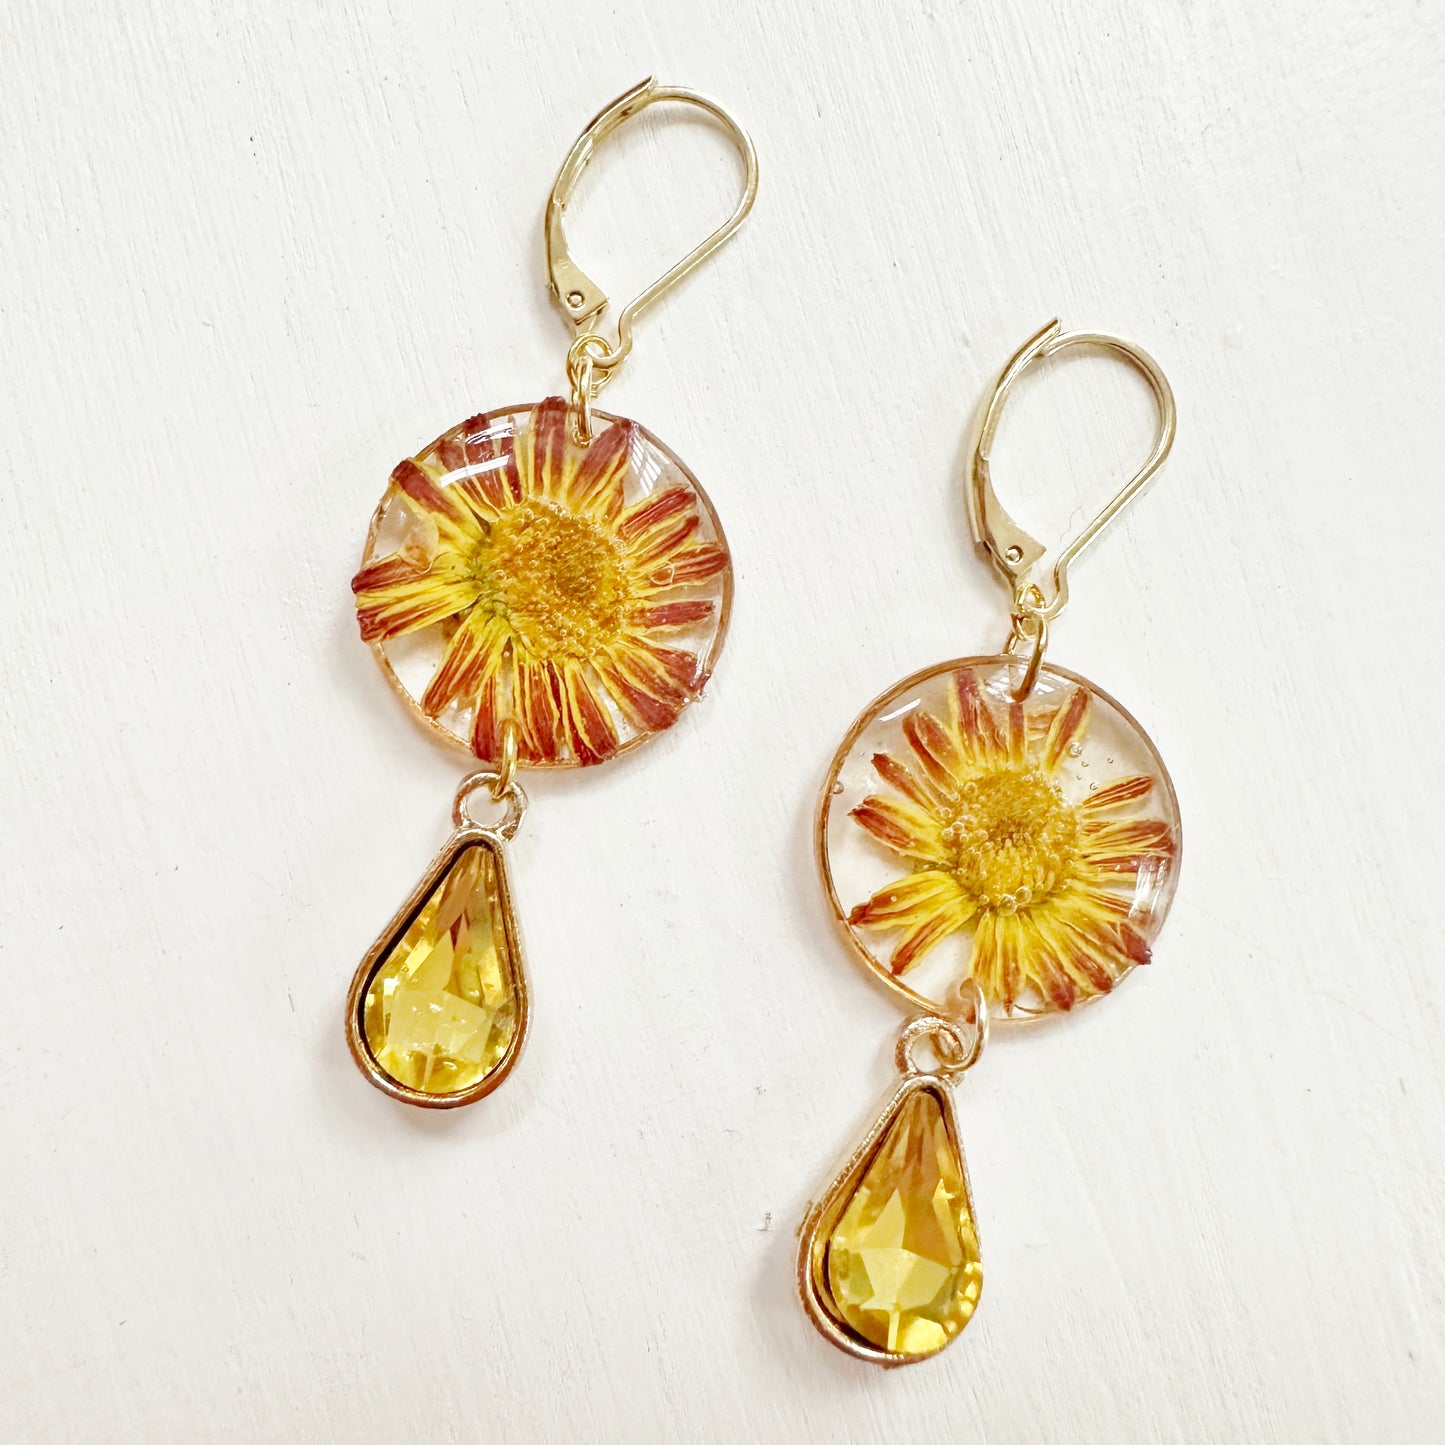 Chrysanthemum Earrings with Yellow Drop